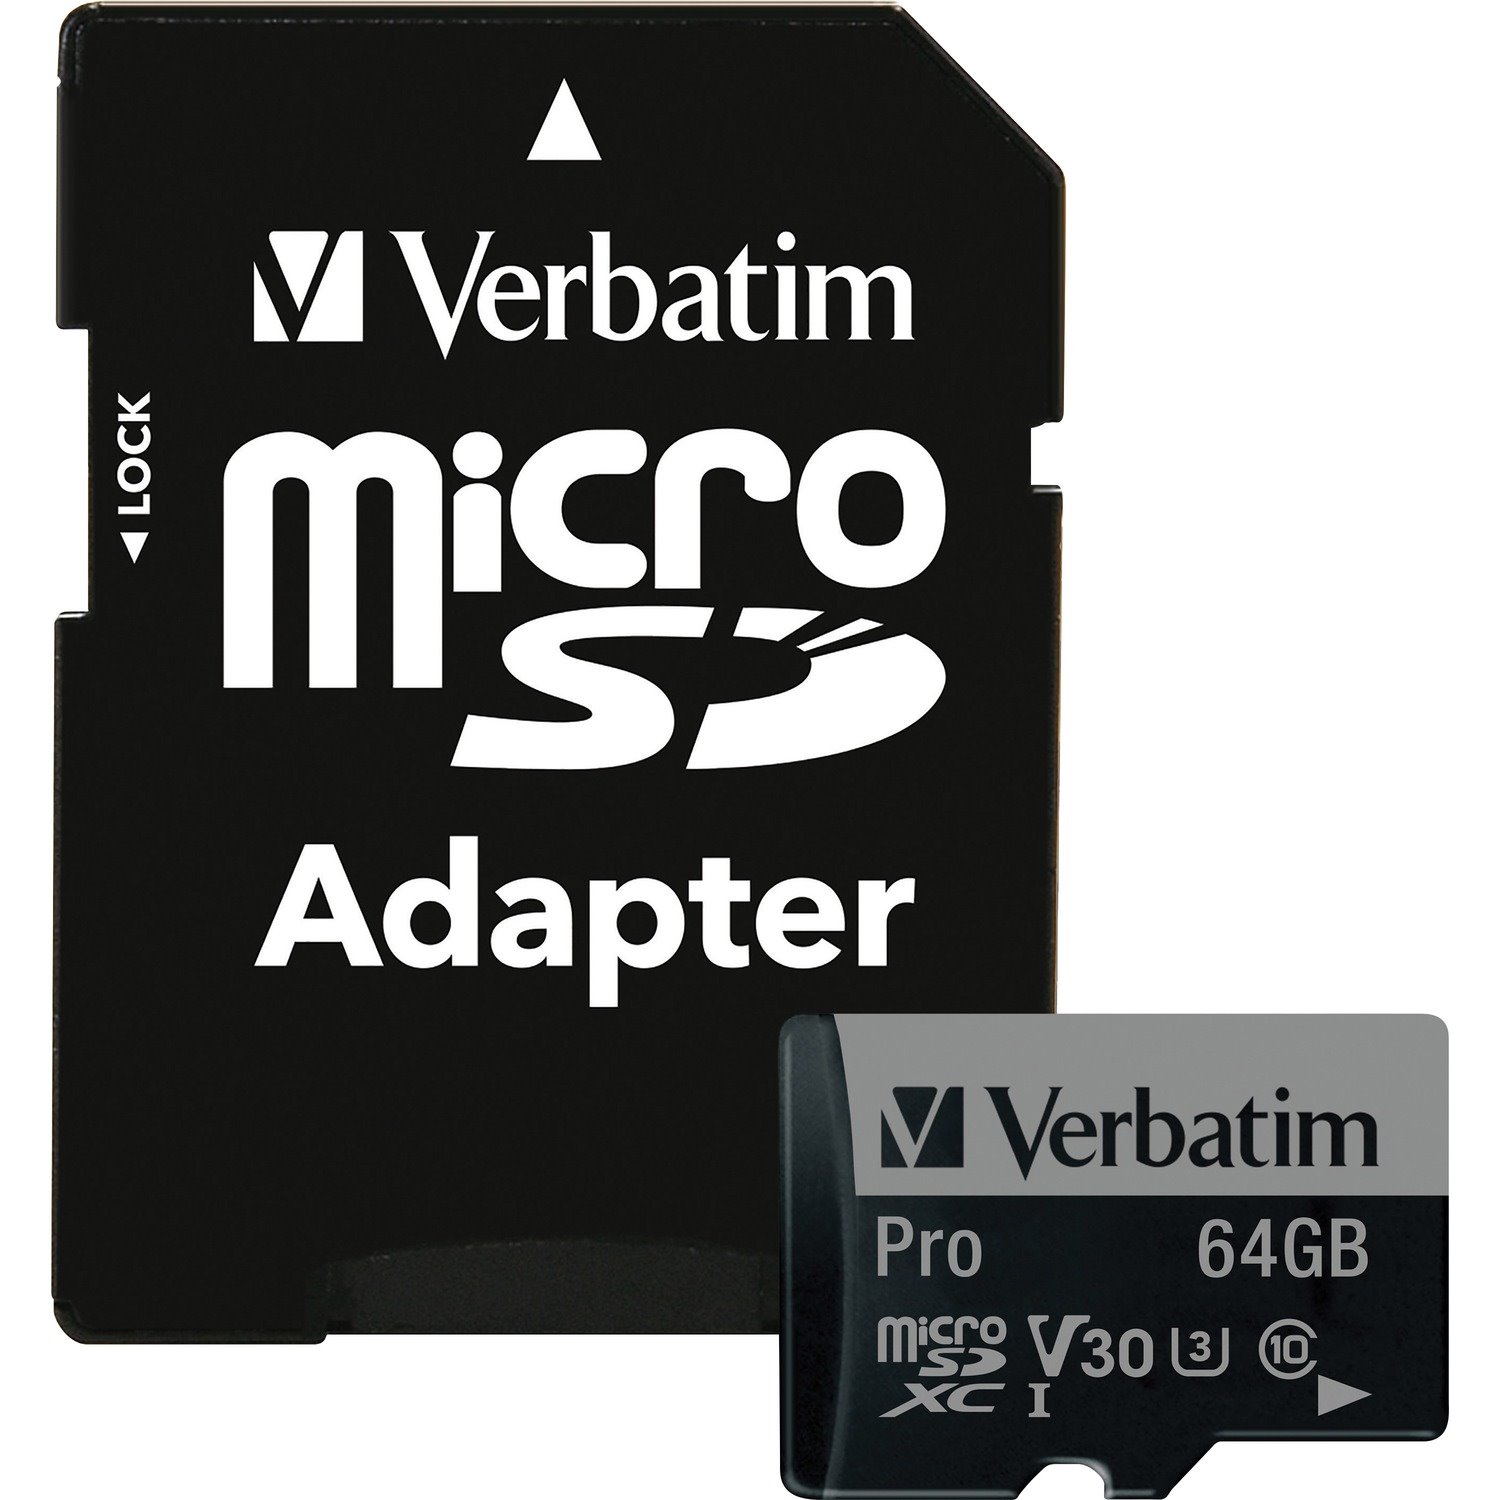 Verbatim 64GB Pro 600X microSDXC Memory Card with Adapter, UHS-I U3 Class 10